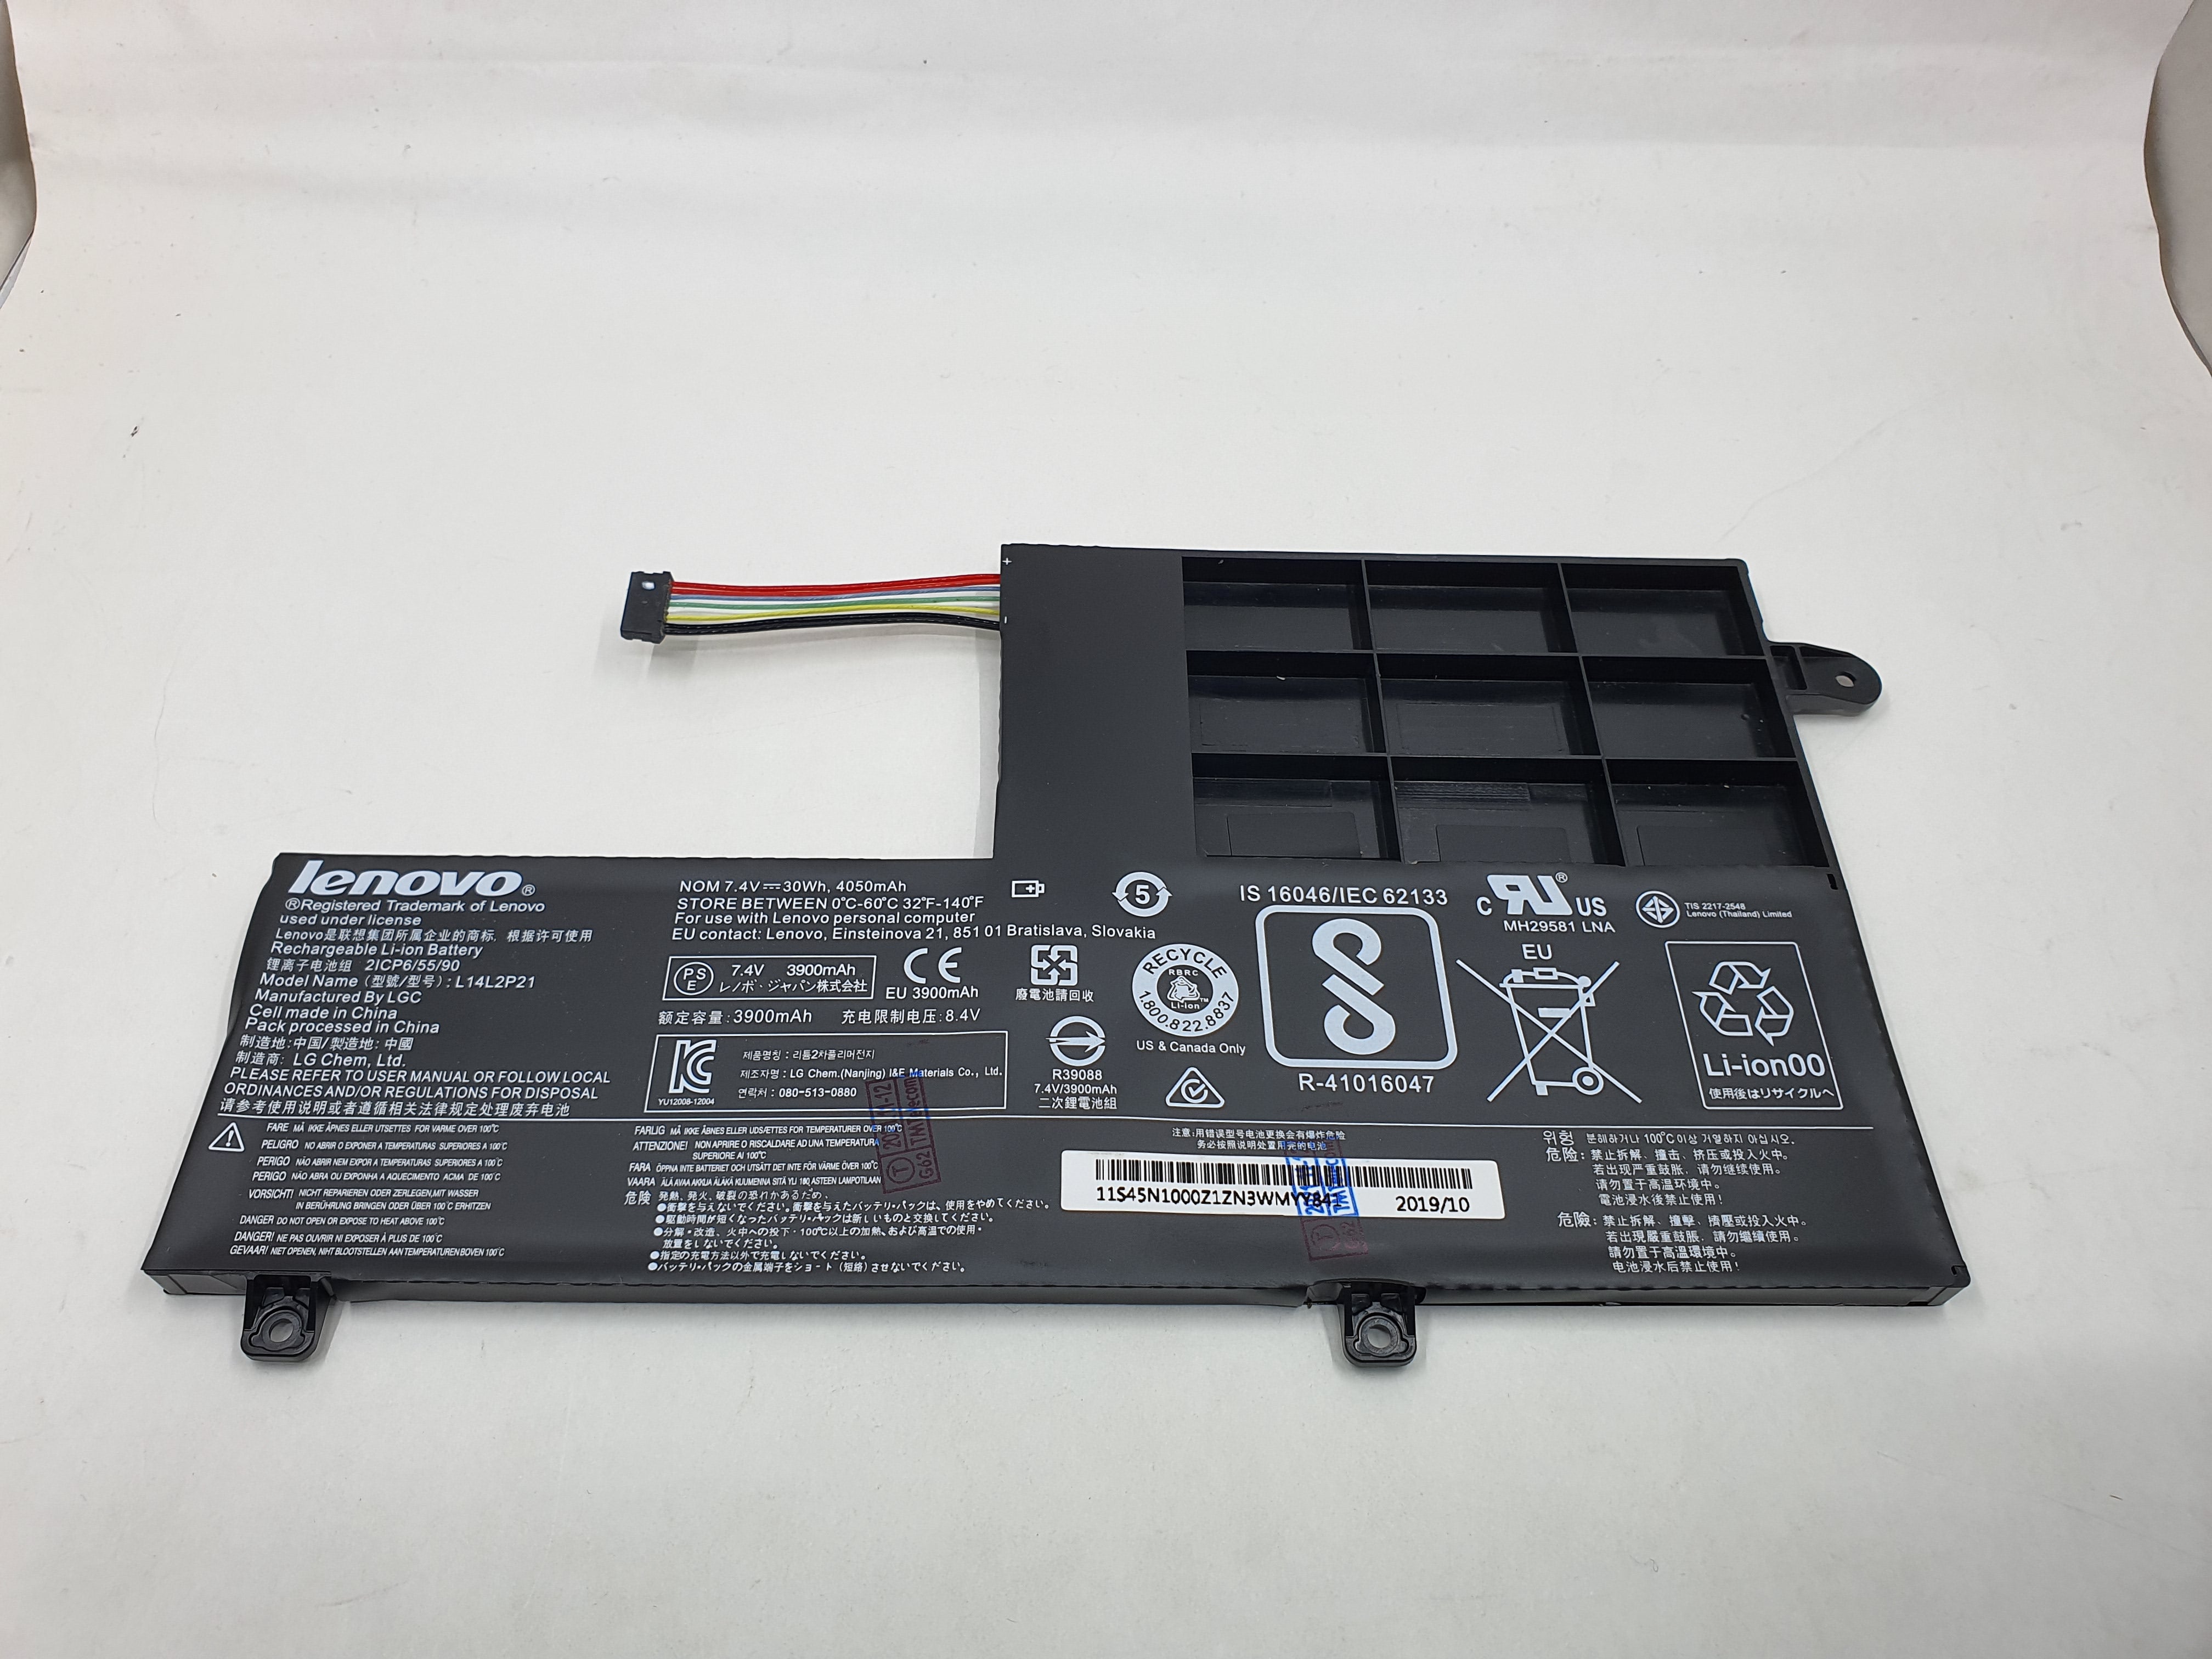 Lenovo Battery Yoga 520-14IKB A1 for Replacement - Lenovo Yoga 520-14IKB A1